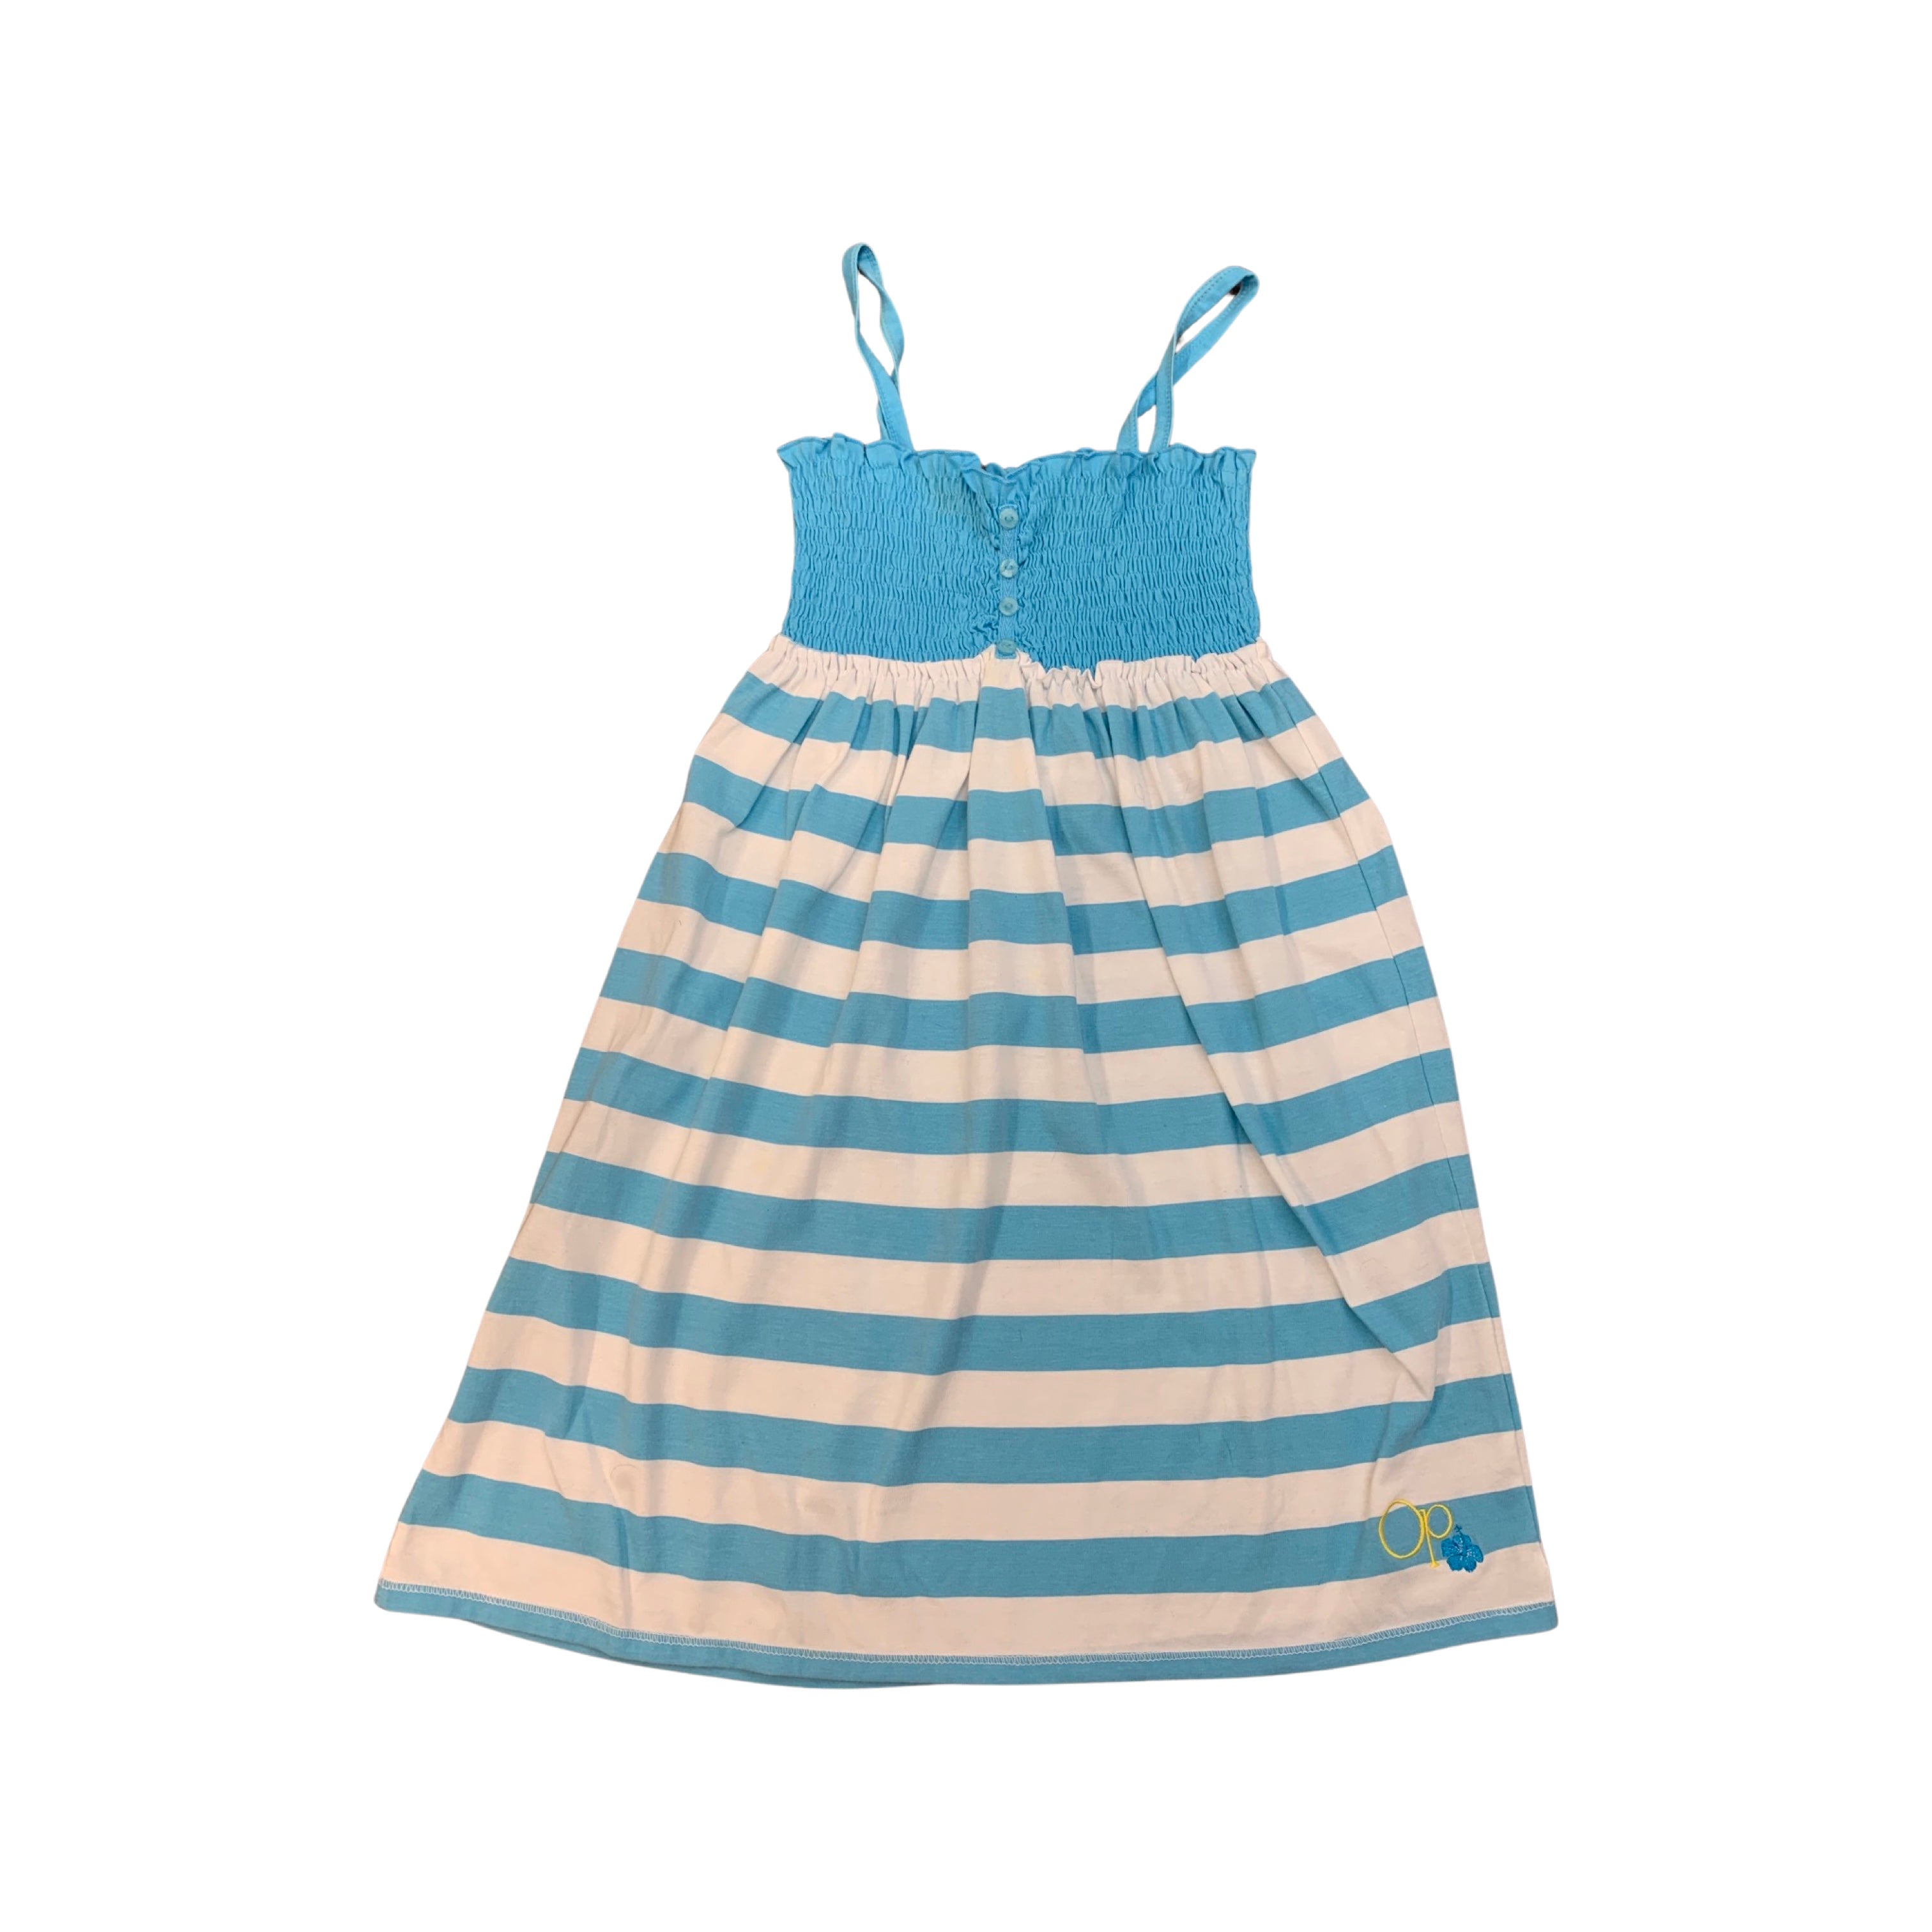 Ocean Pacific OP Striped Summer Dress Girls 13 Years